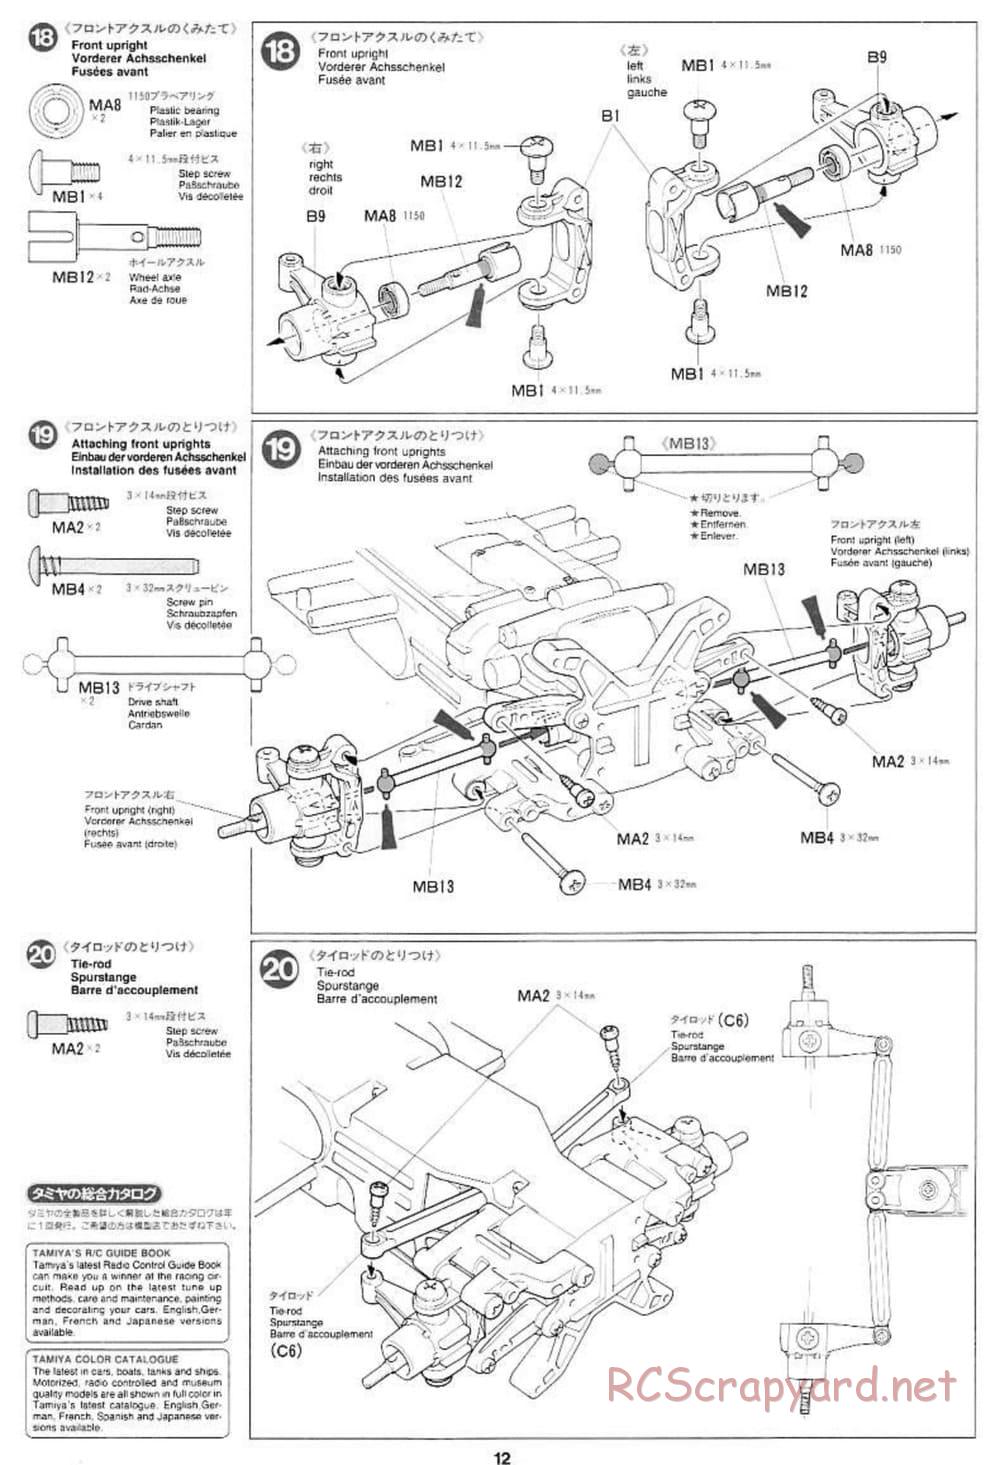 Tamiya - Subaru Impreza WRC - TL-01 Chassis - Manual - Page 12